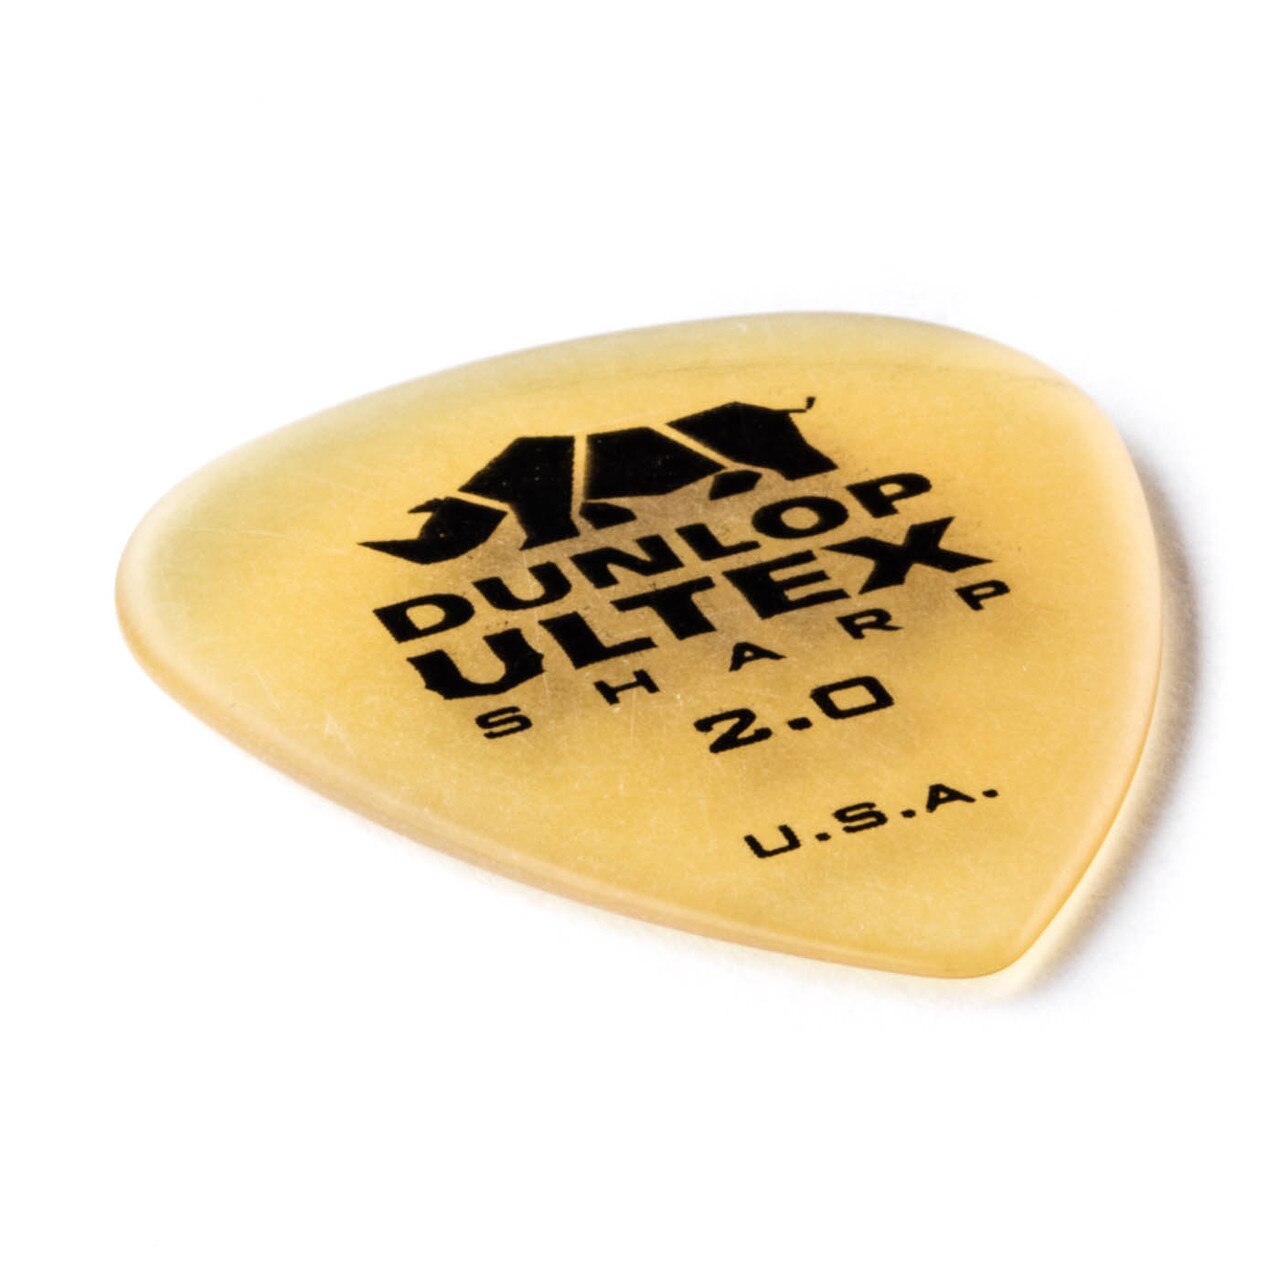 Jim Dunlop Ultex Sharp 433 2.0mm - Plectrum - Variation 1